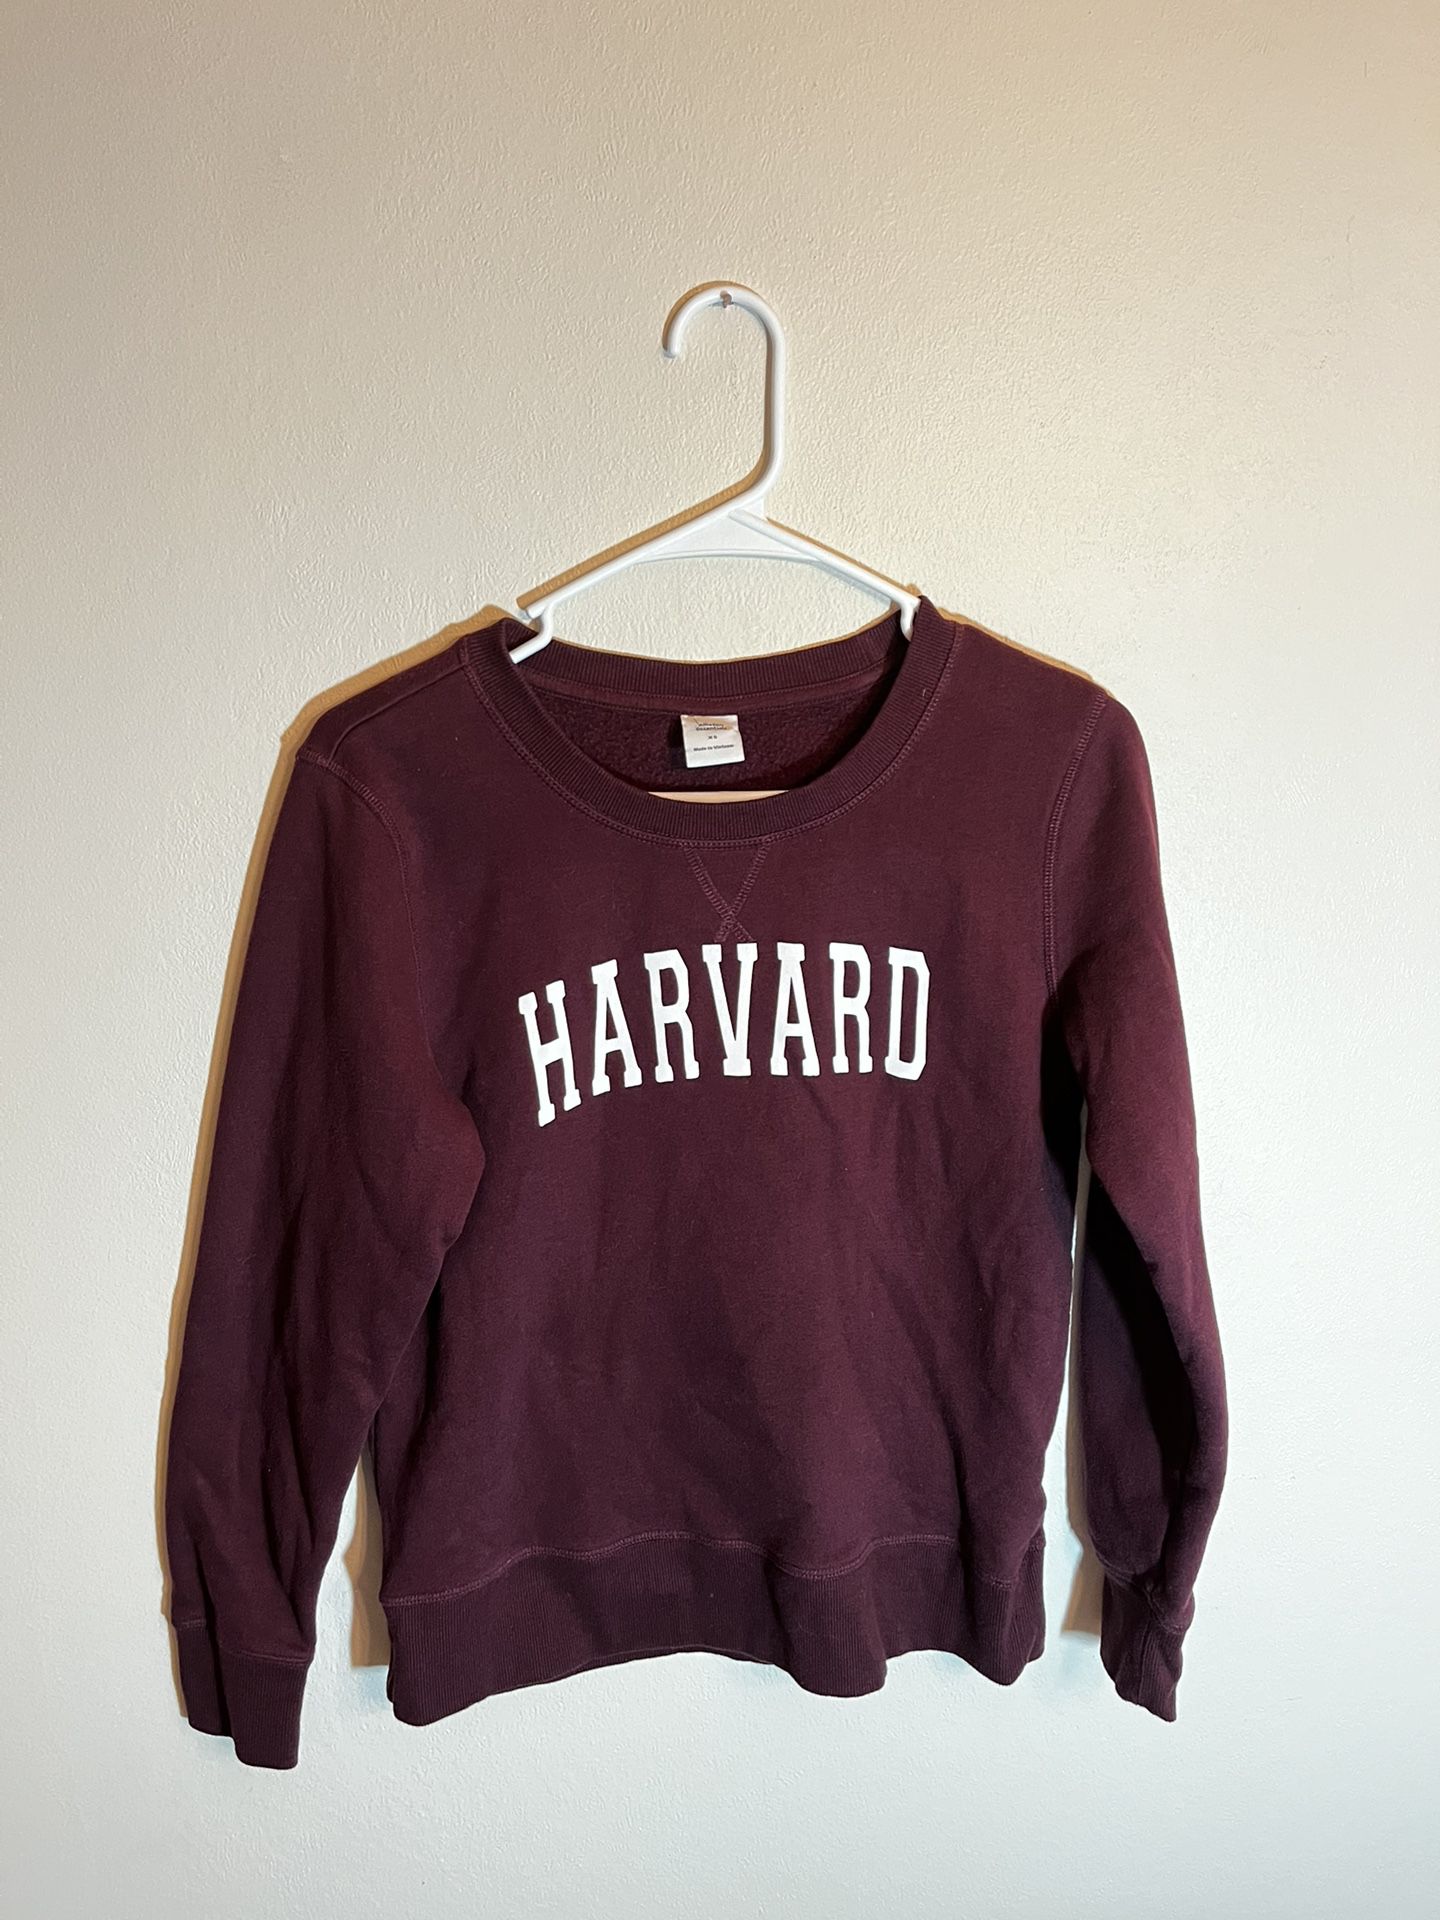 Harvard Crewneck Sweatshirt Adult X-Small